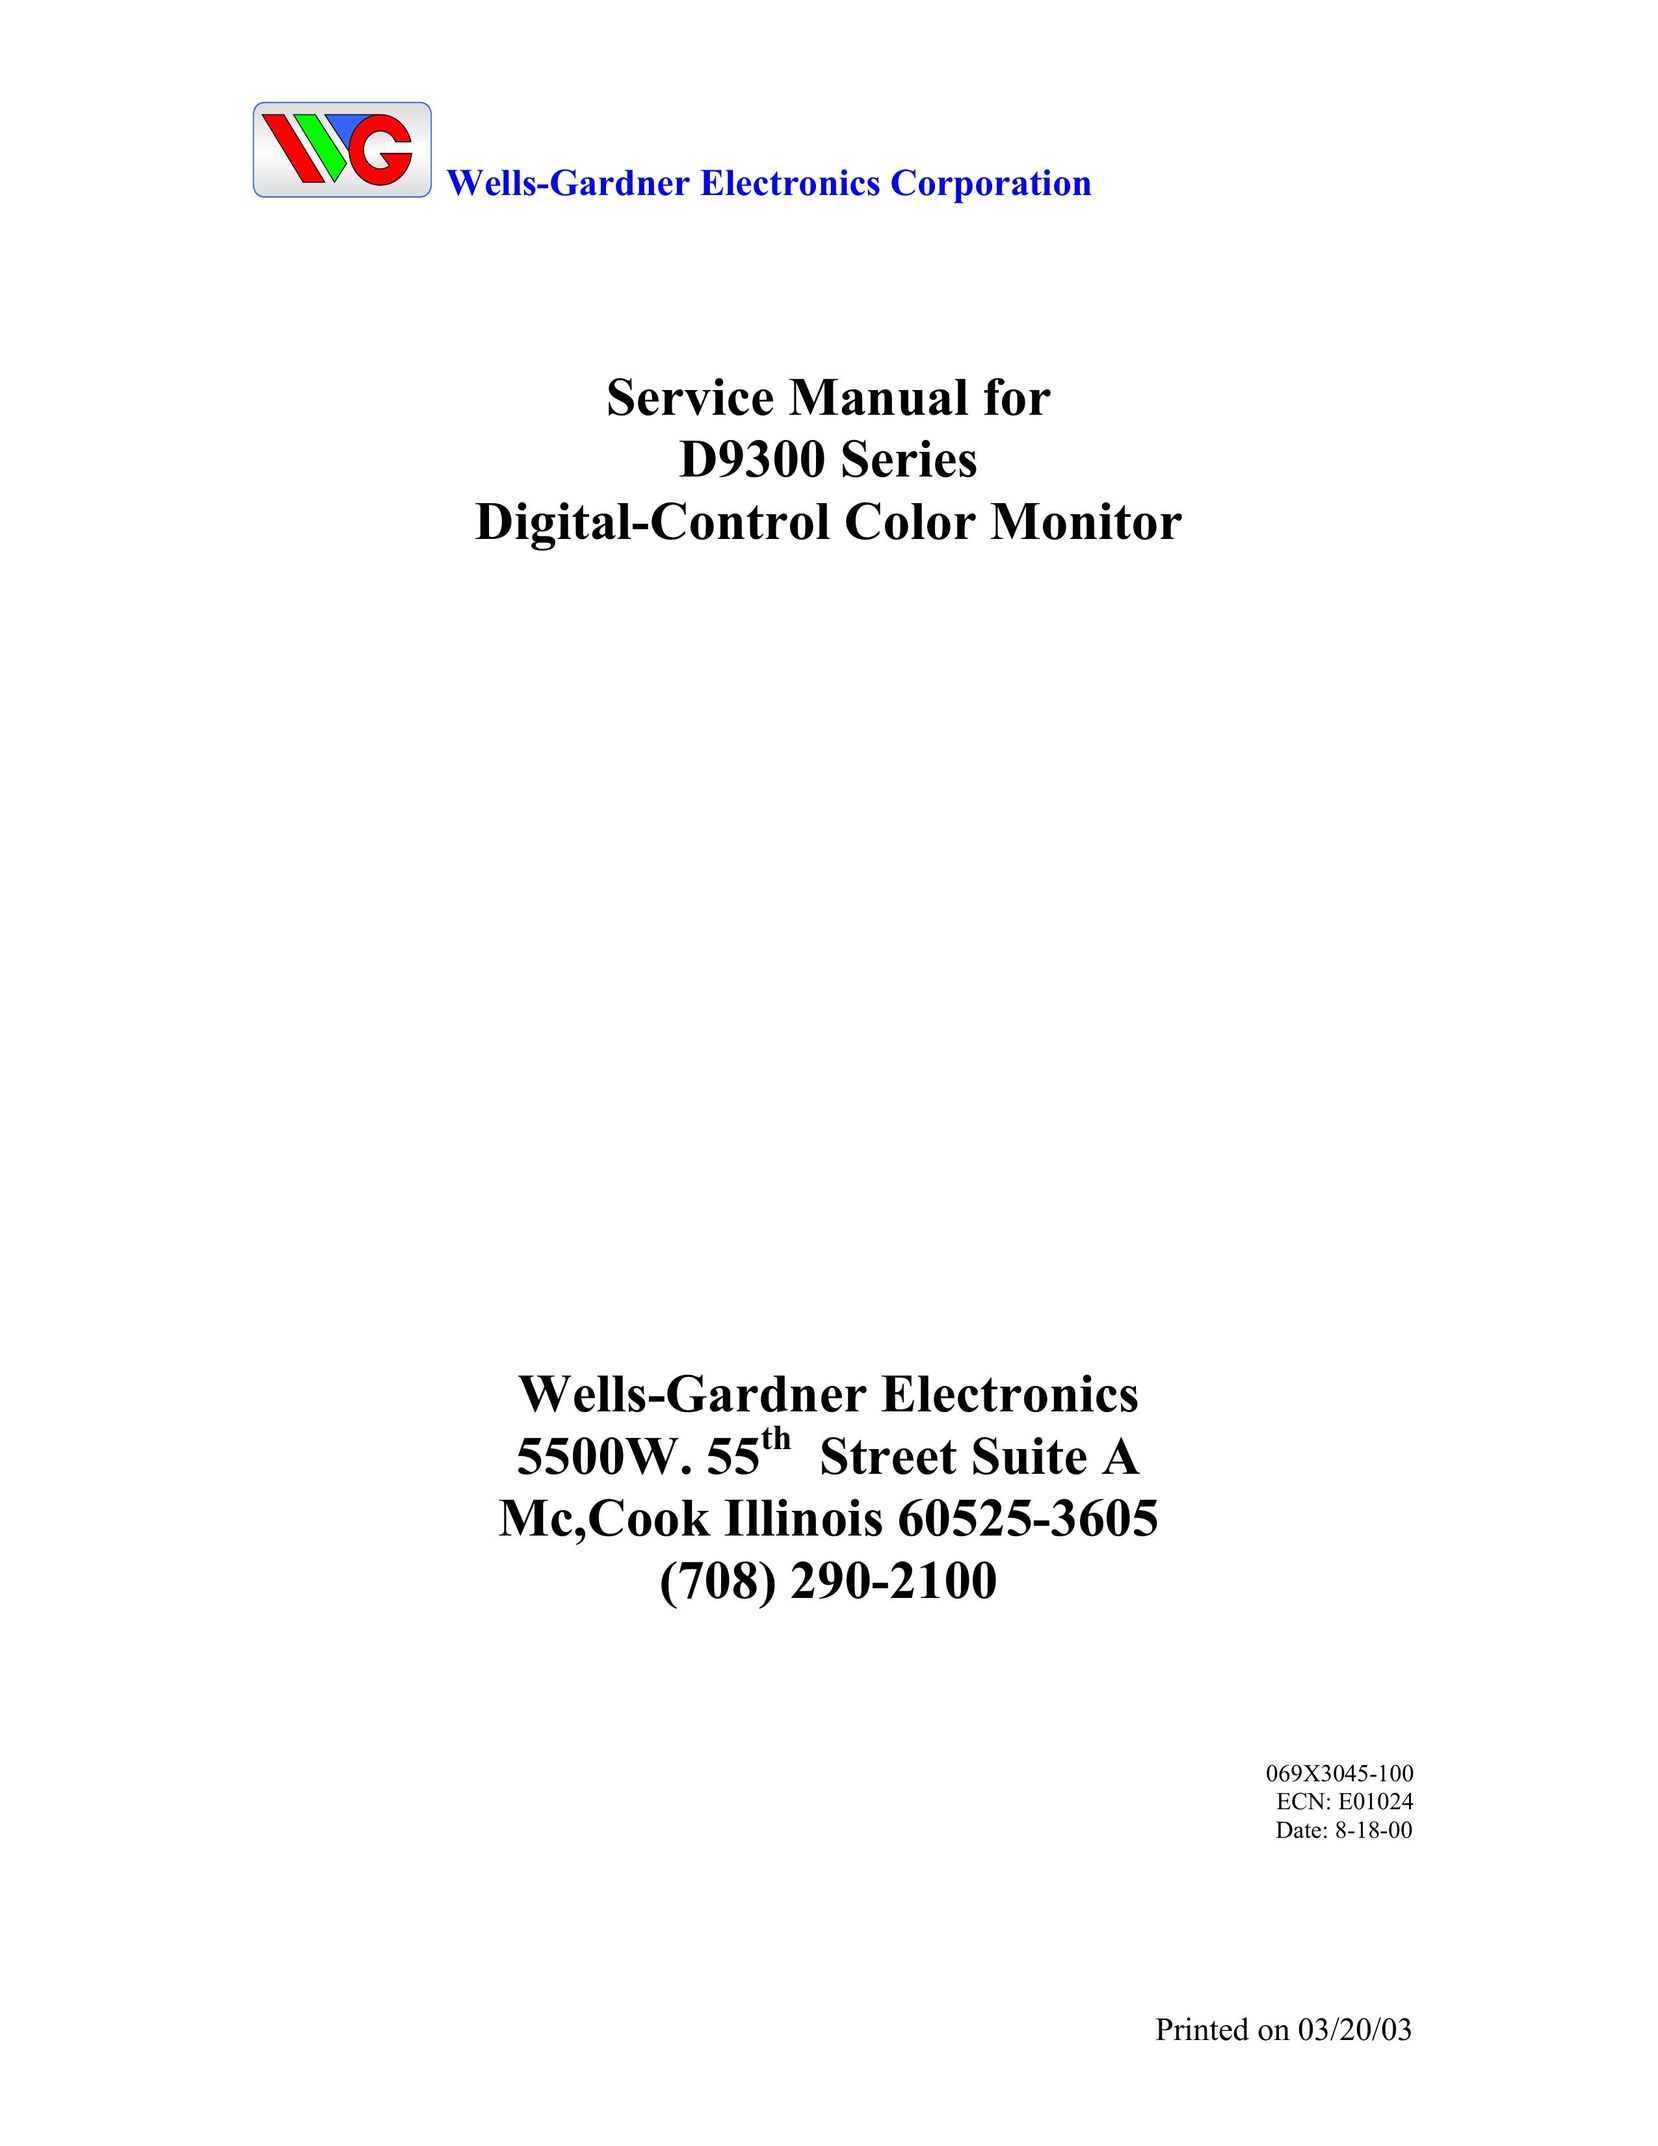 Wells-Gardner D9300 Series Computer Monitor User Manual